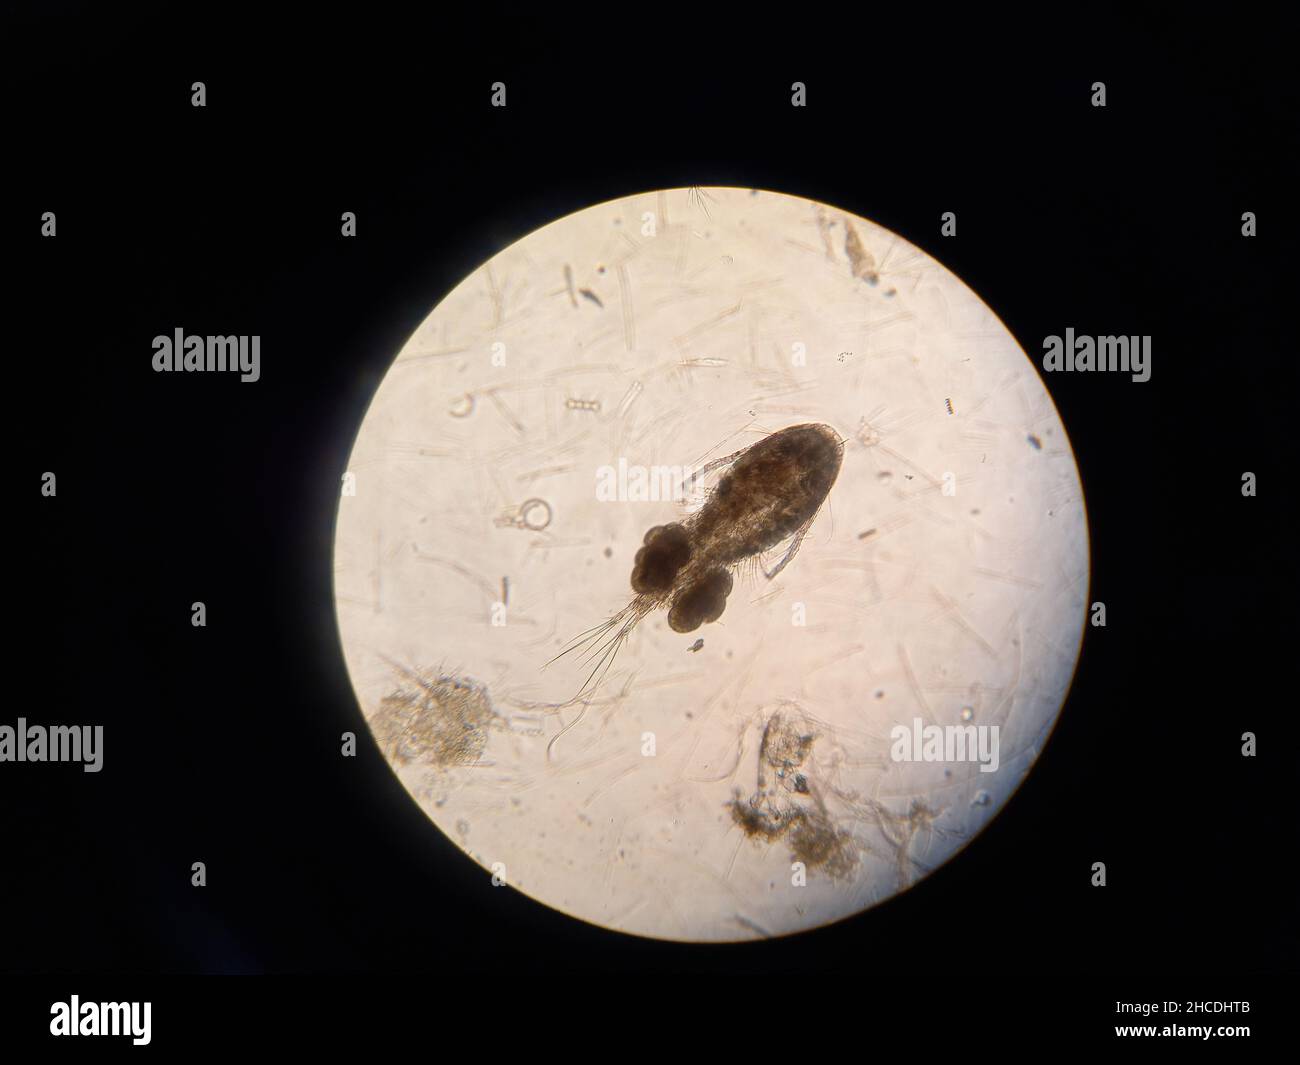 Inferior crustacean under the microscope magnification. Stock Photo